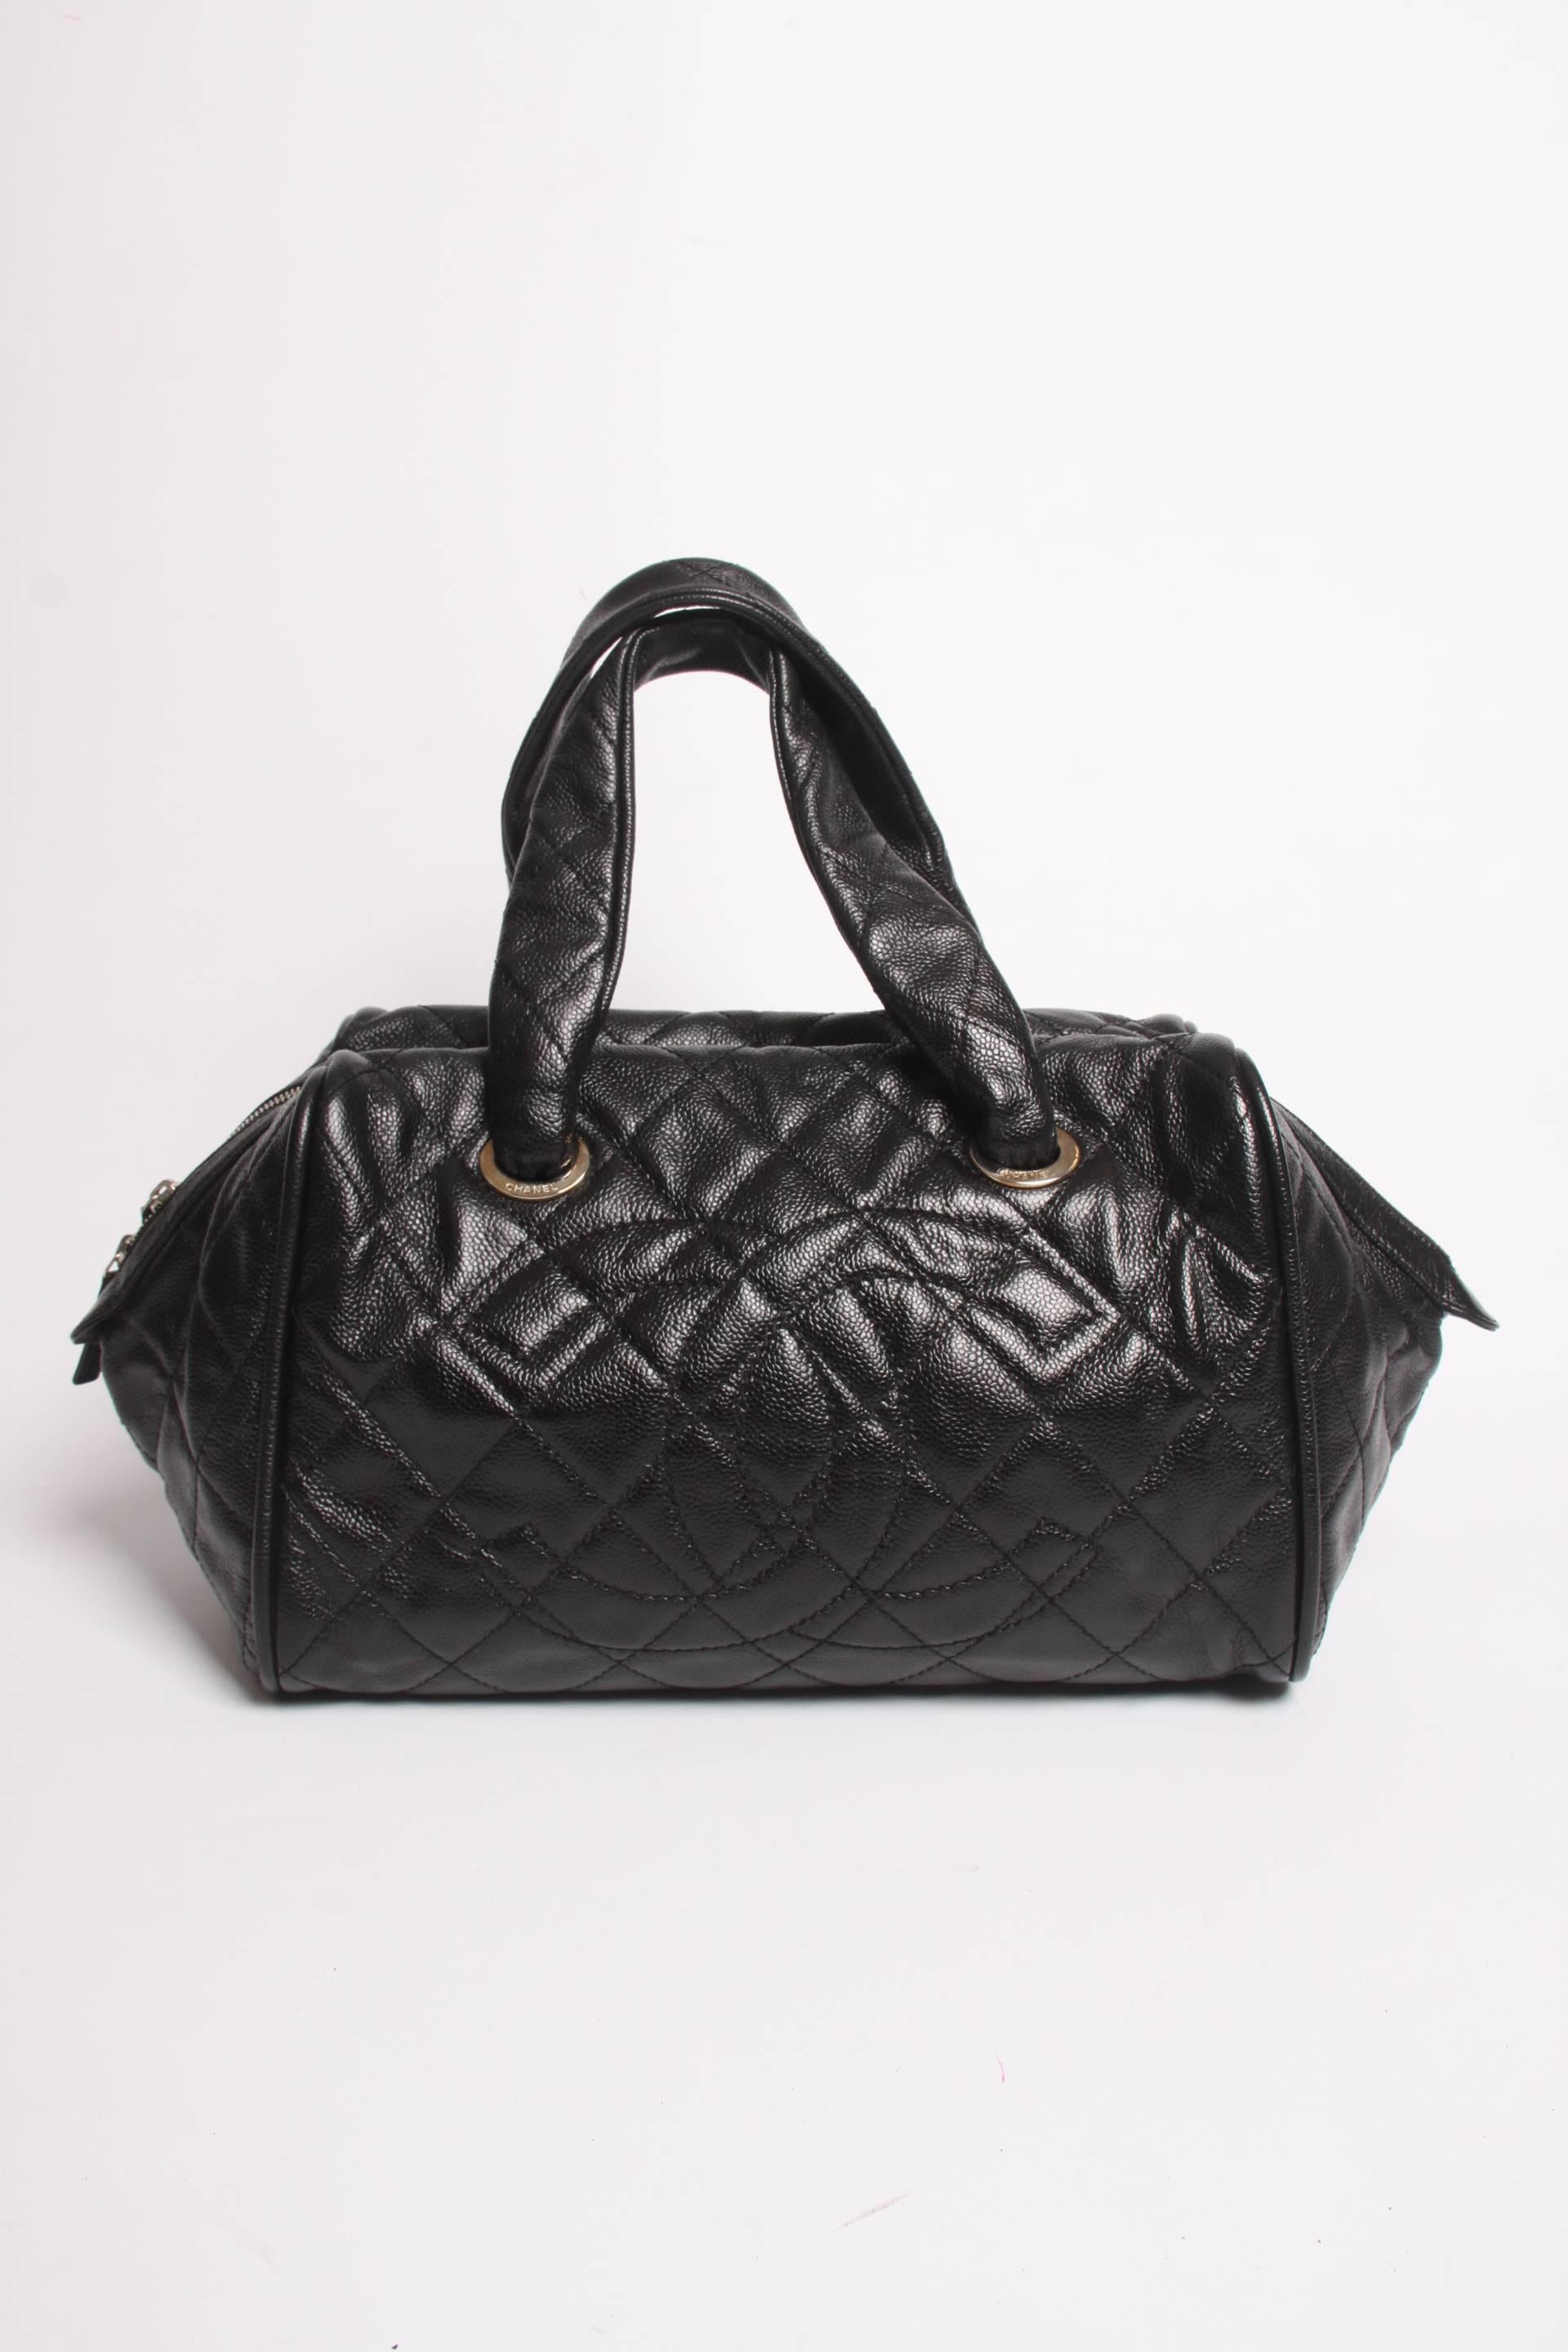 Chanel Top Handle Shopper Bag - black caviar leather  For Sale 3